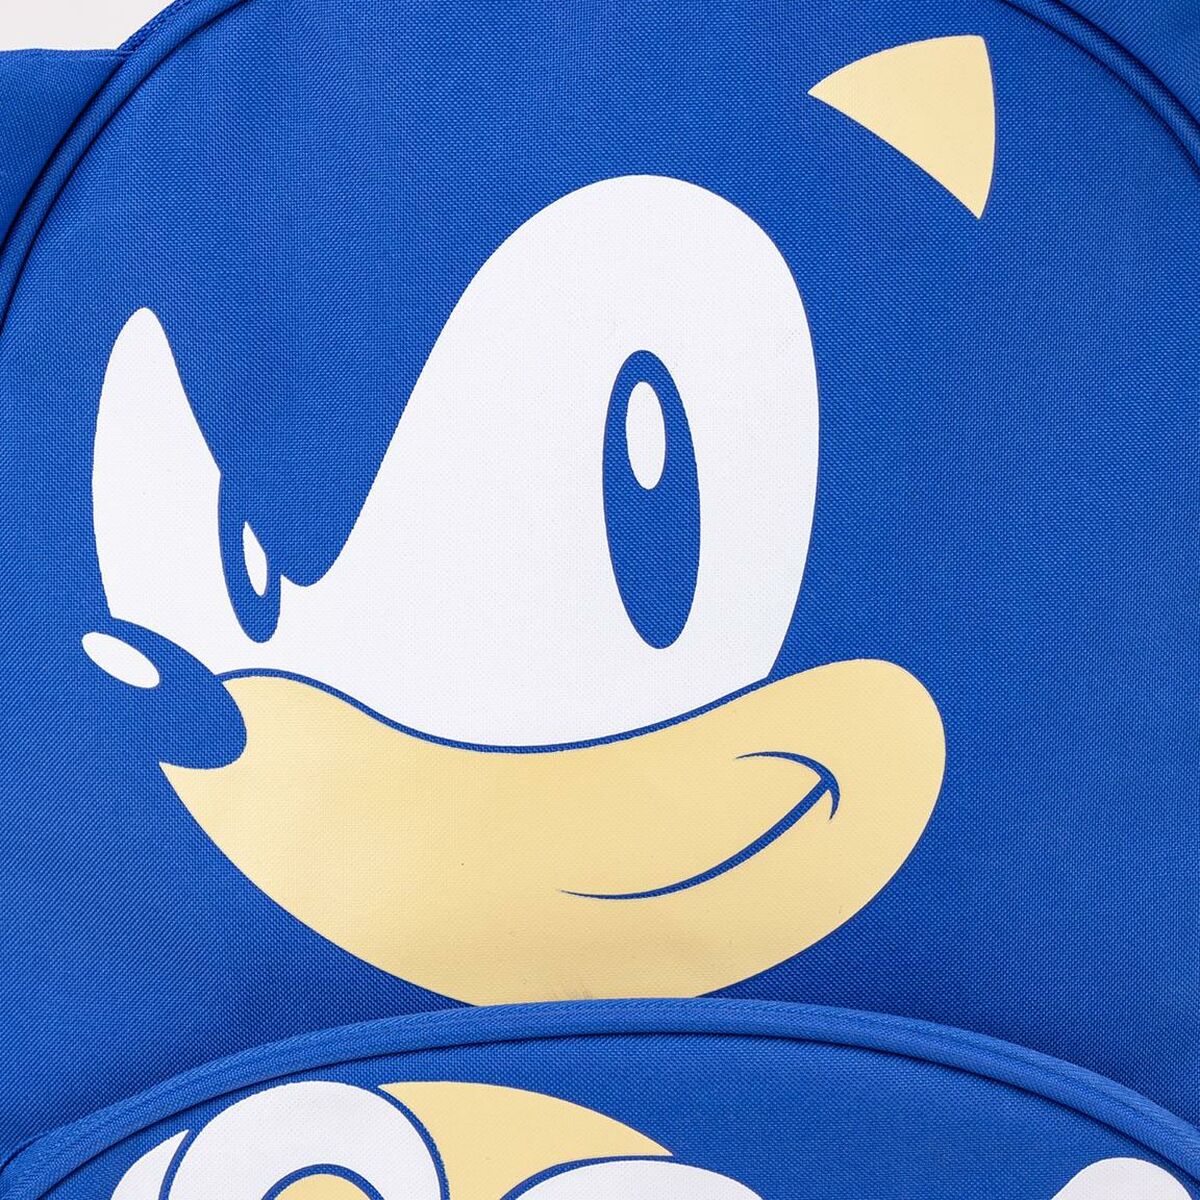 Schulrucksack Sonic Blau 15,5 x 30 x 10 cm